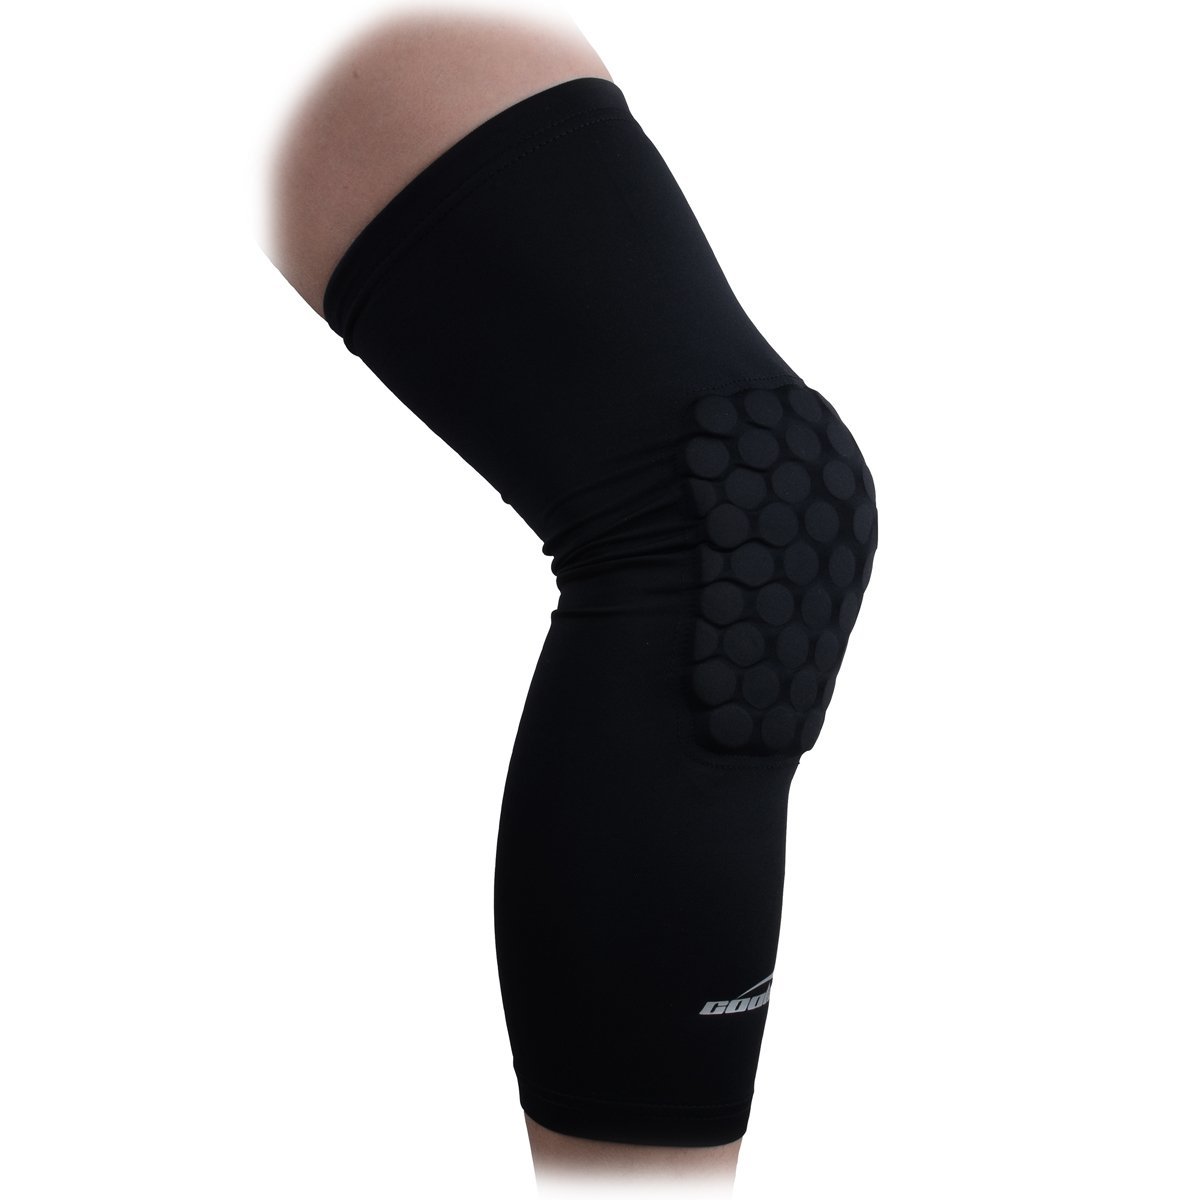 Best basketball knee pads and sleeves - kneesafe.com